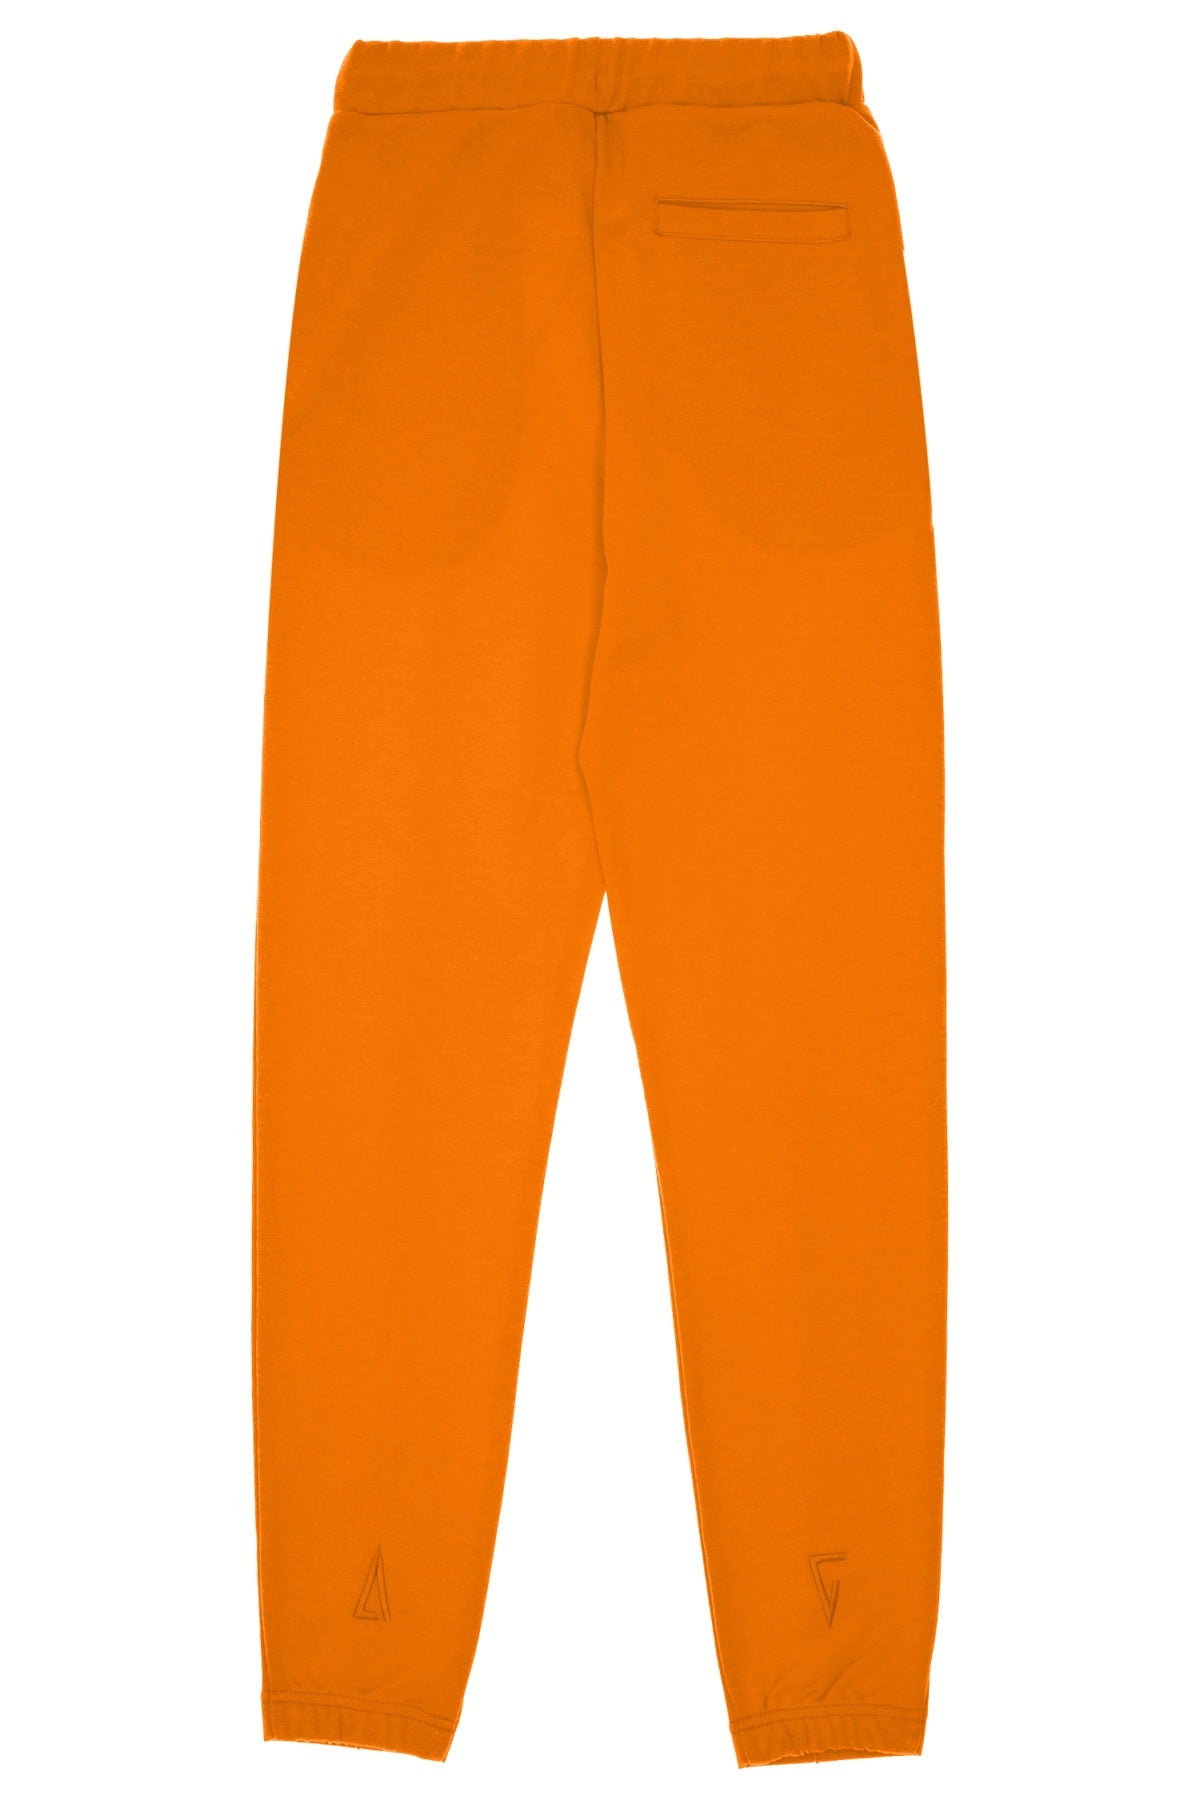 Cotton Skinny Sweatpants - Persimman Orange